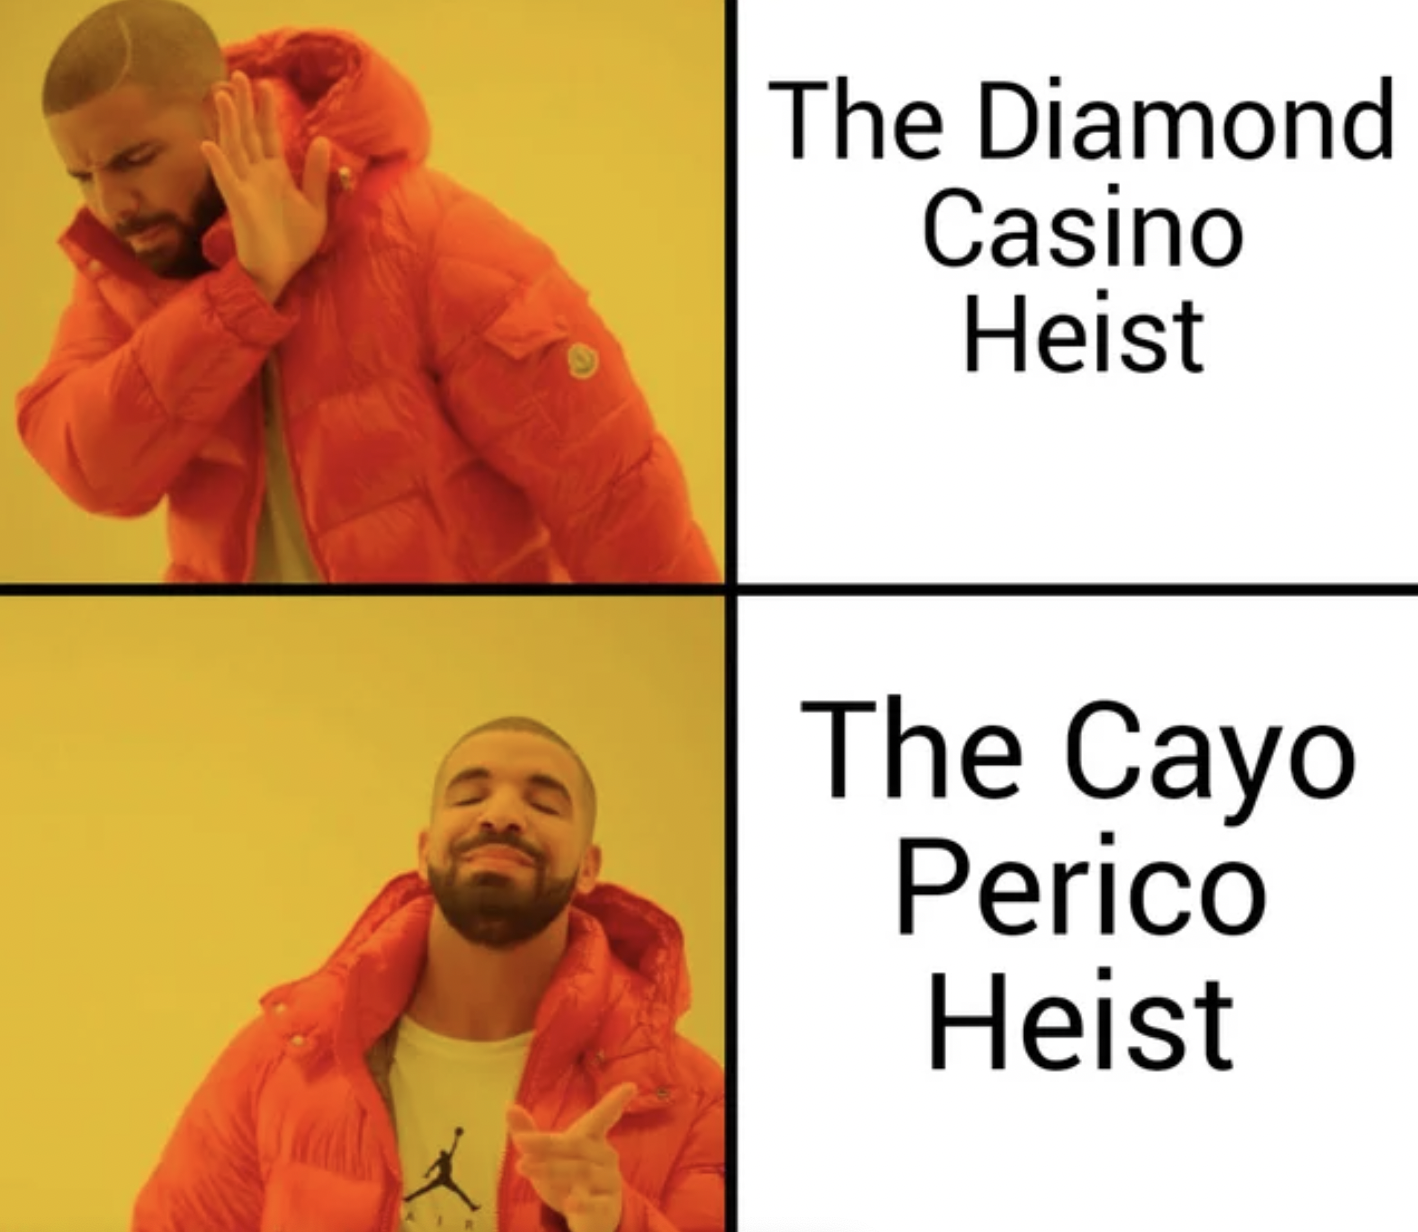 GTA V Memes - human behavior - The Diamond Casino Heist The Cayo Perico Heist